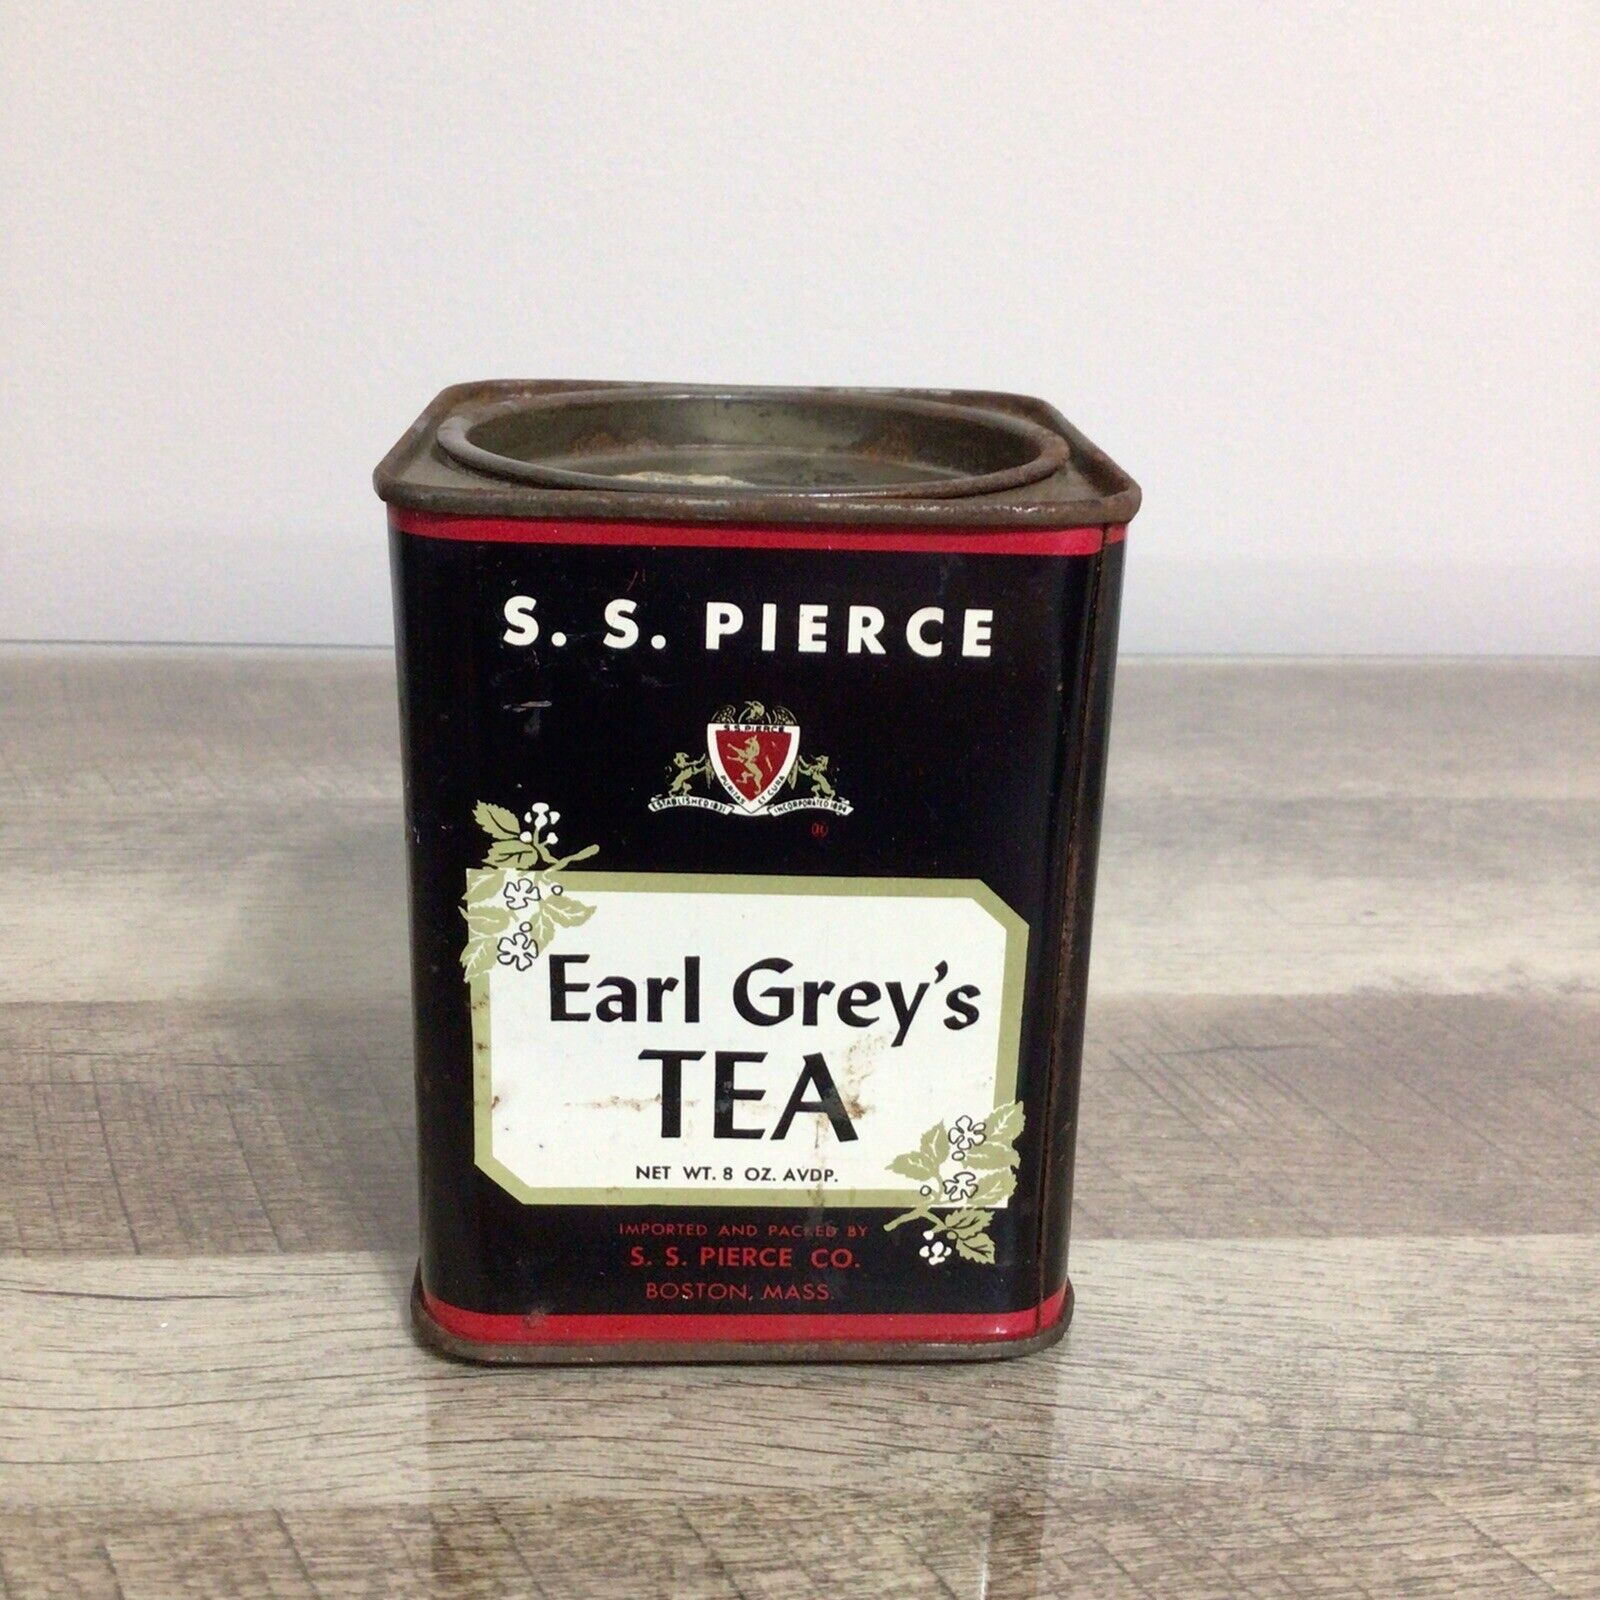 Vintage Advertising Tea Tin S.S. Pierce Co. Boston Mass Earl Grey's ~ Empty